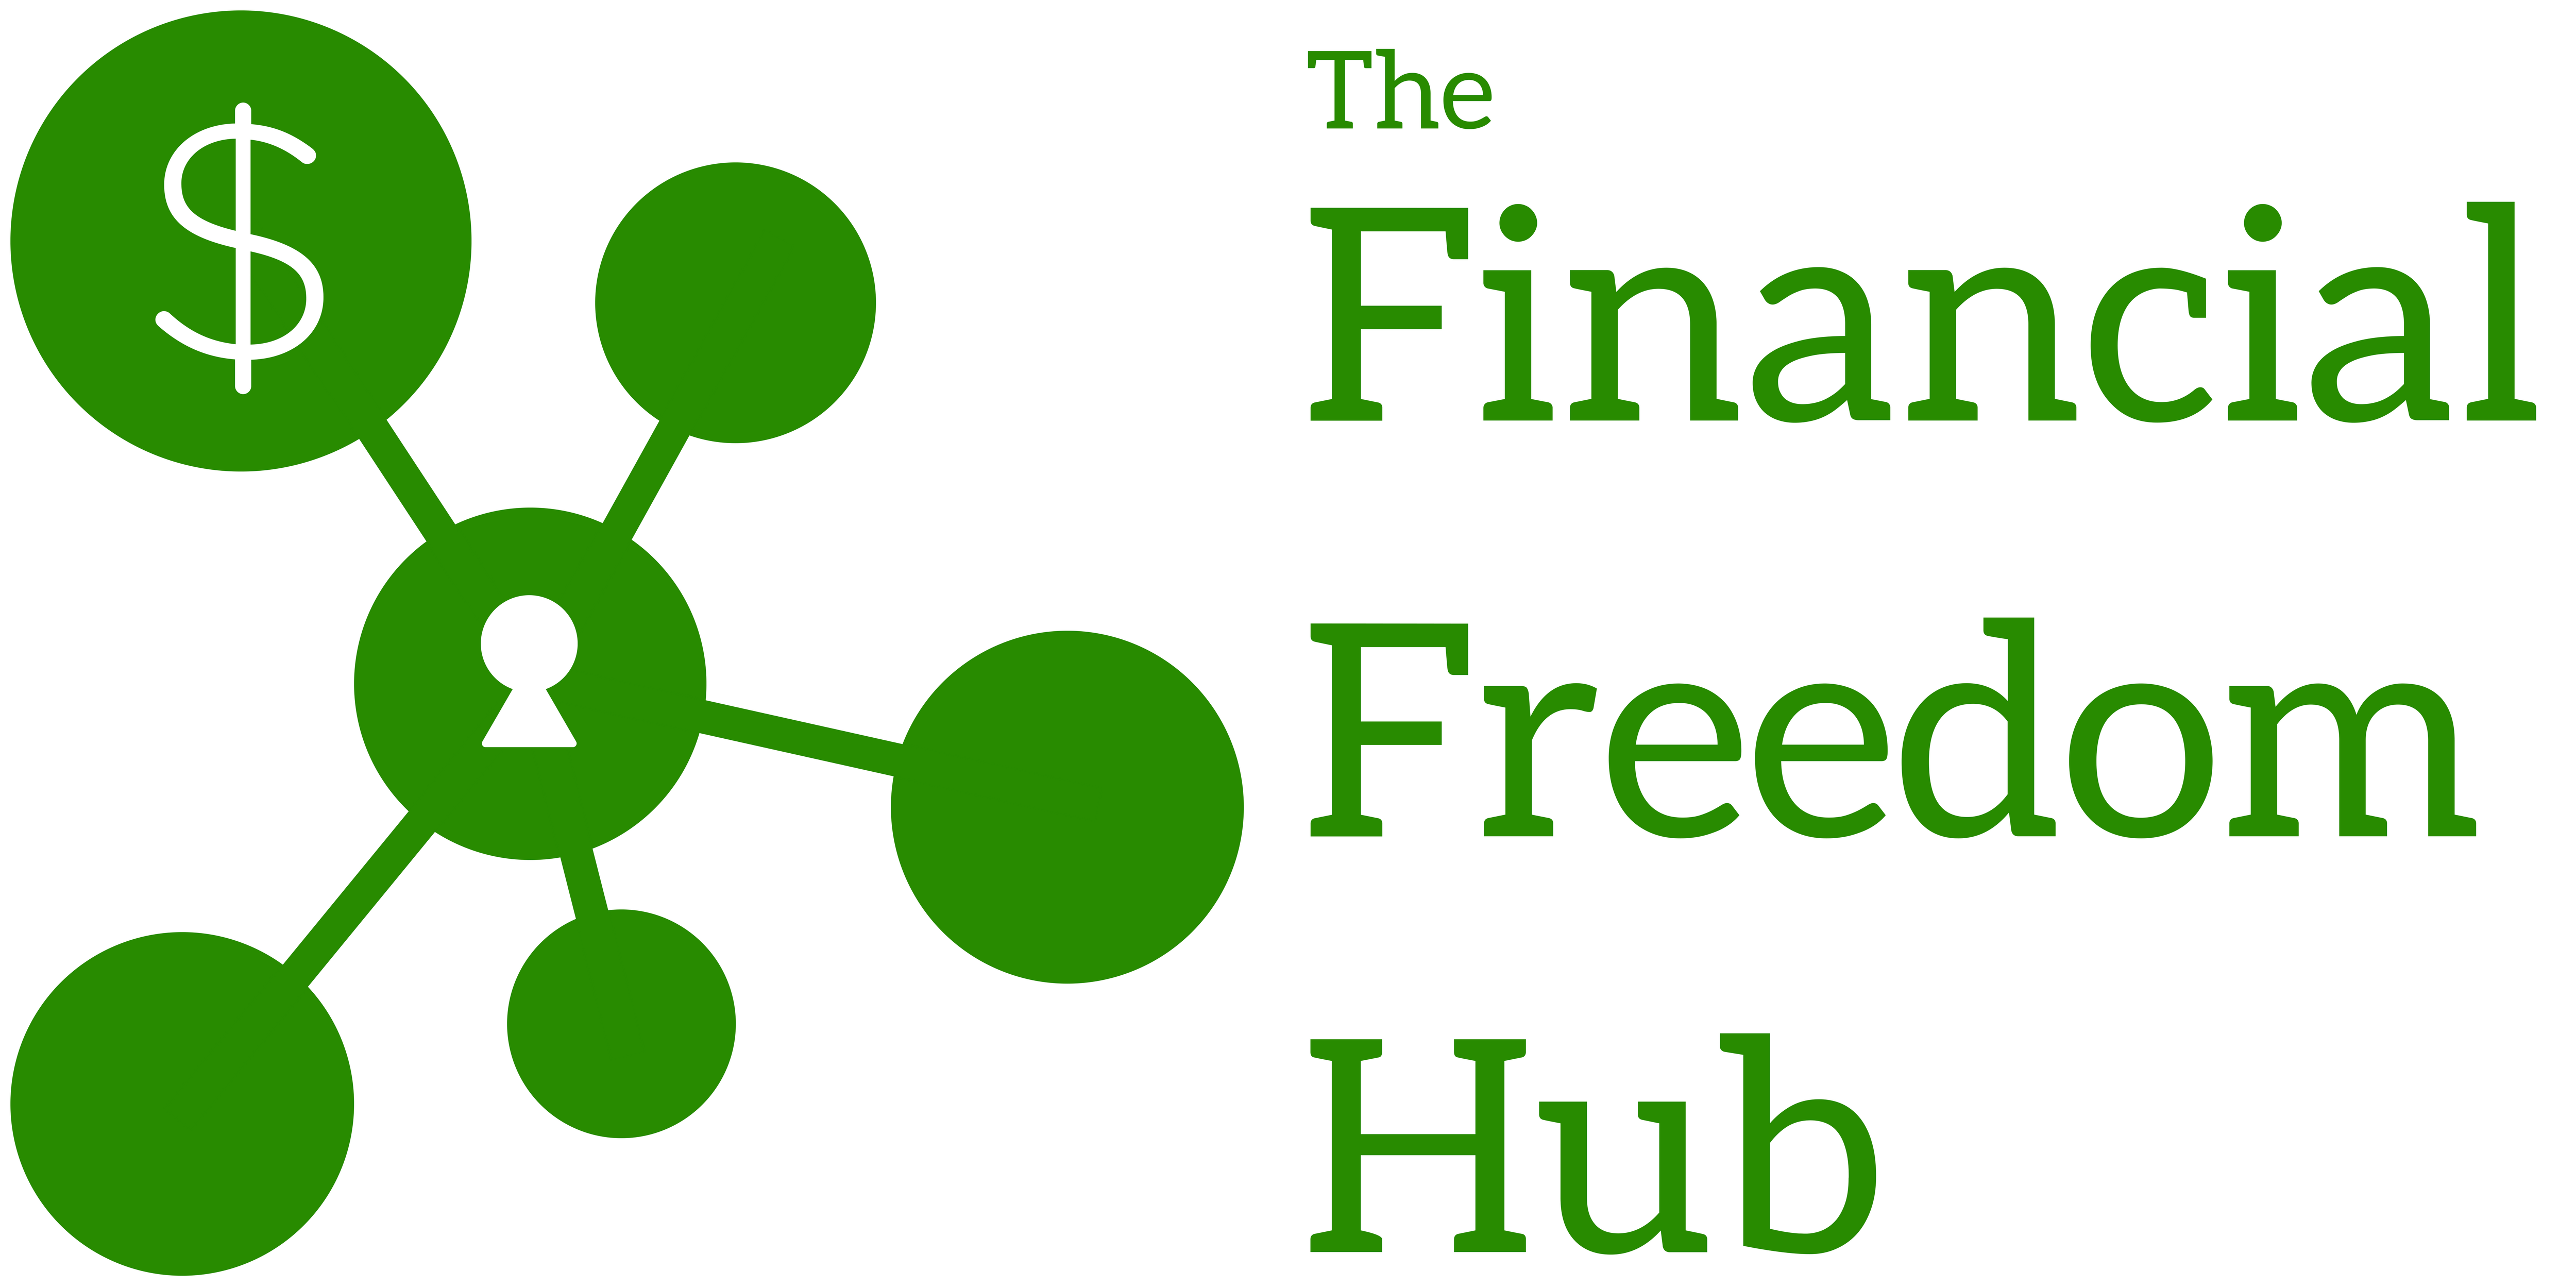 The Financial Freedom Hub